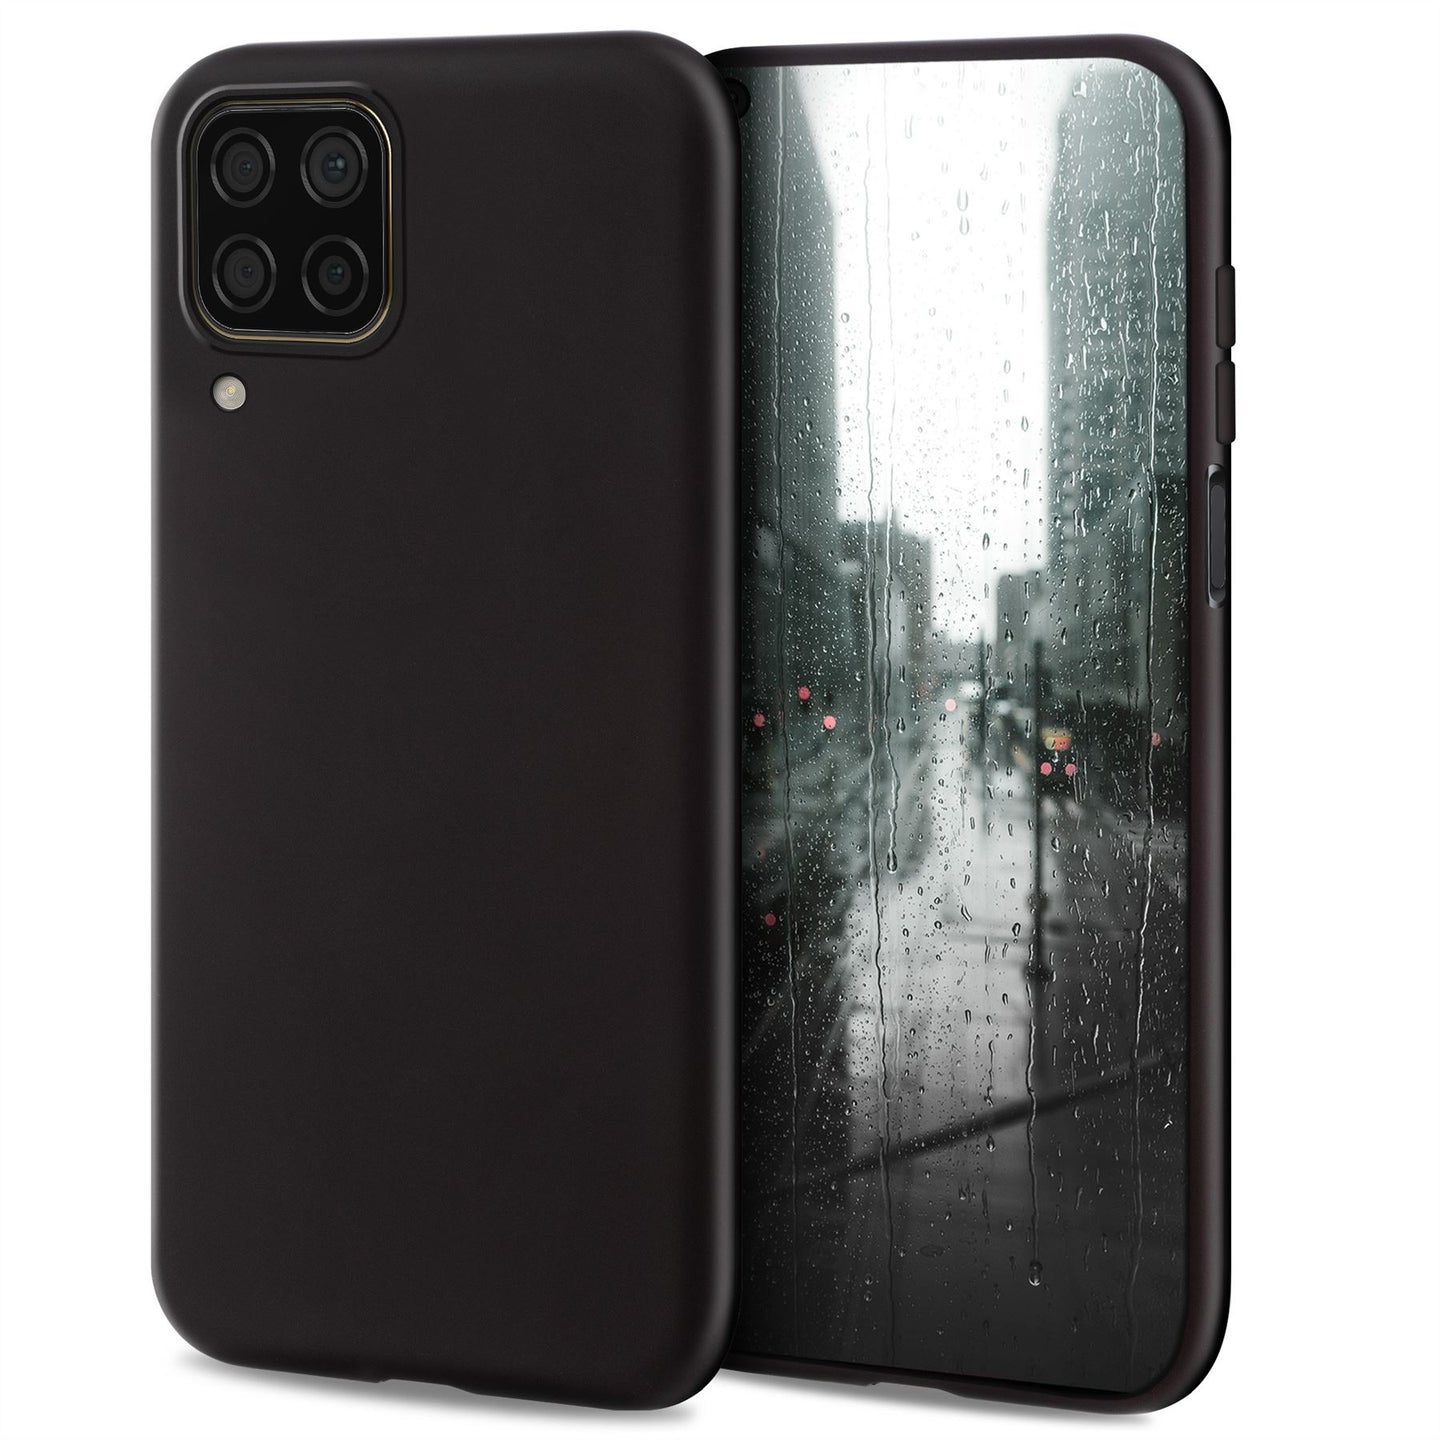 Moozy Minimalist Series Silicone Case for Huawei P40 Lite, Black - Matte Finish Slim Soft TPU Cover